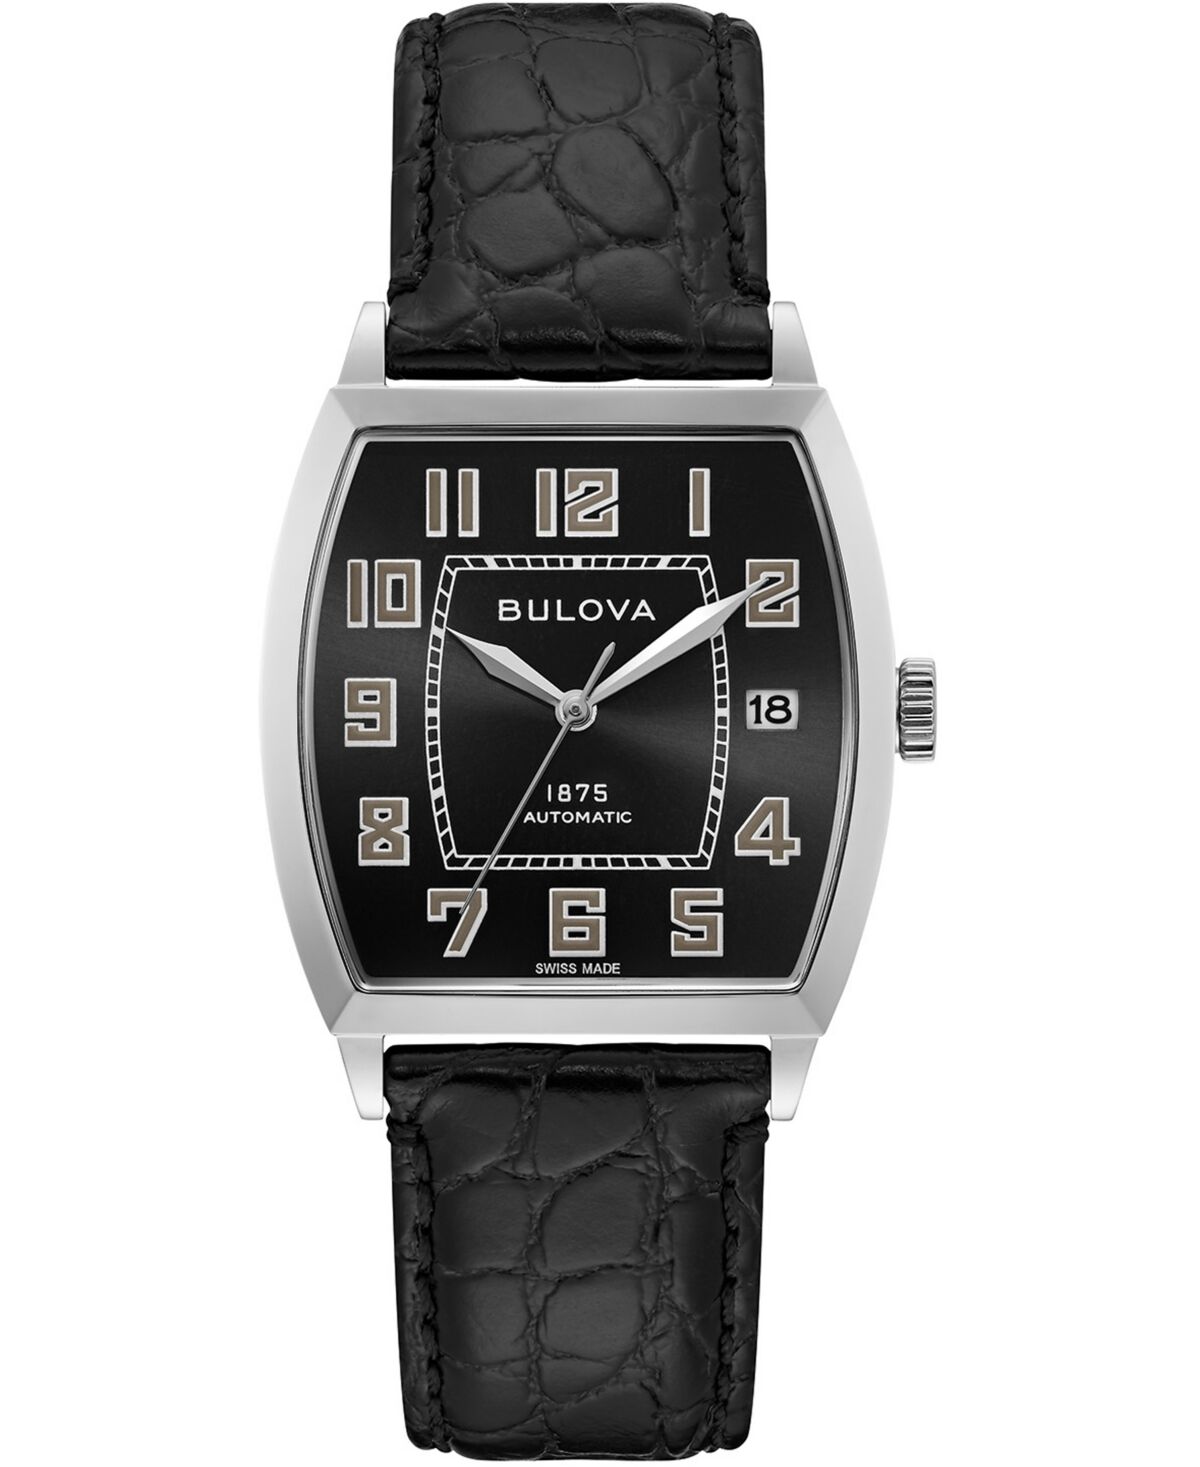 Bulova Limited Edition Bulova Men's Swiss Automatic Joseph Bulova Black Leather Strap Watch 33x33.5mm - Black